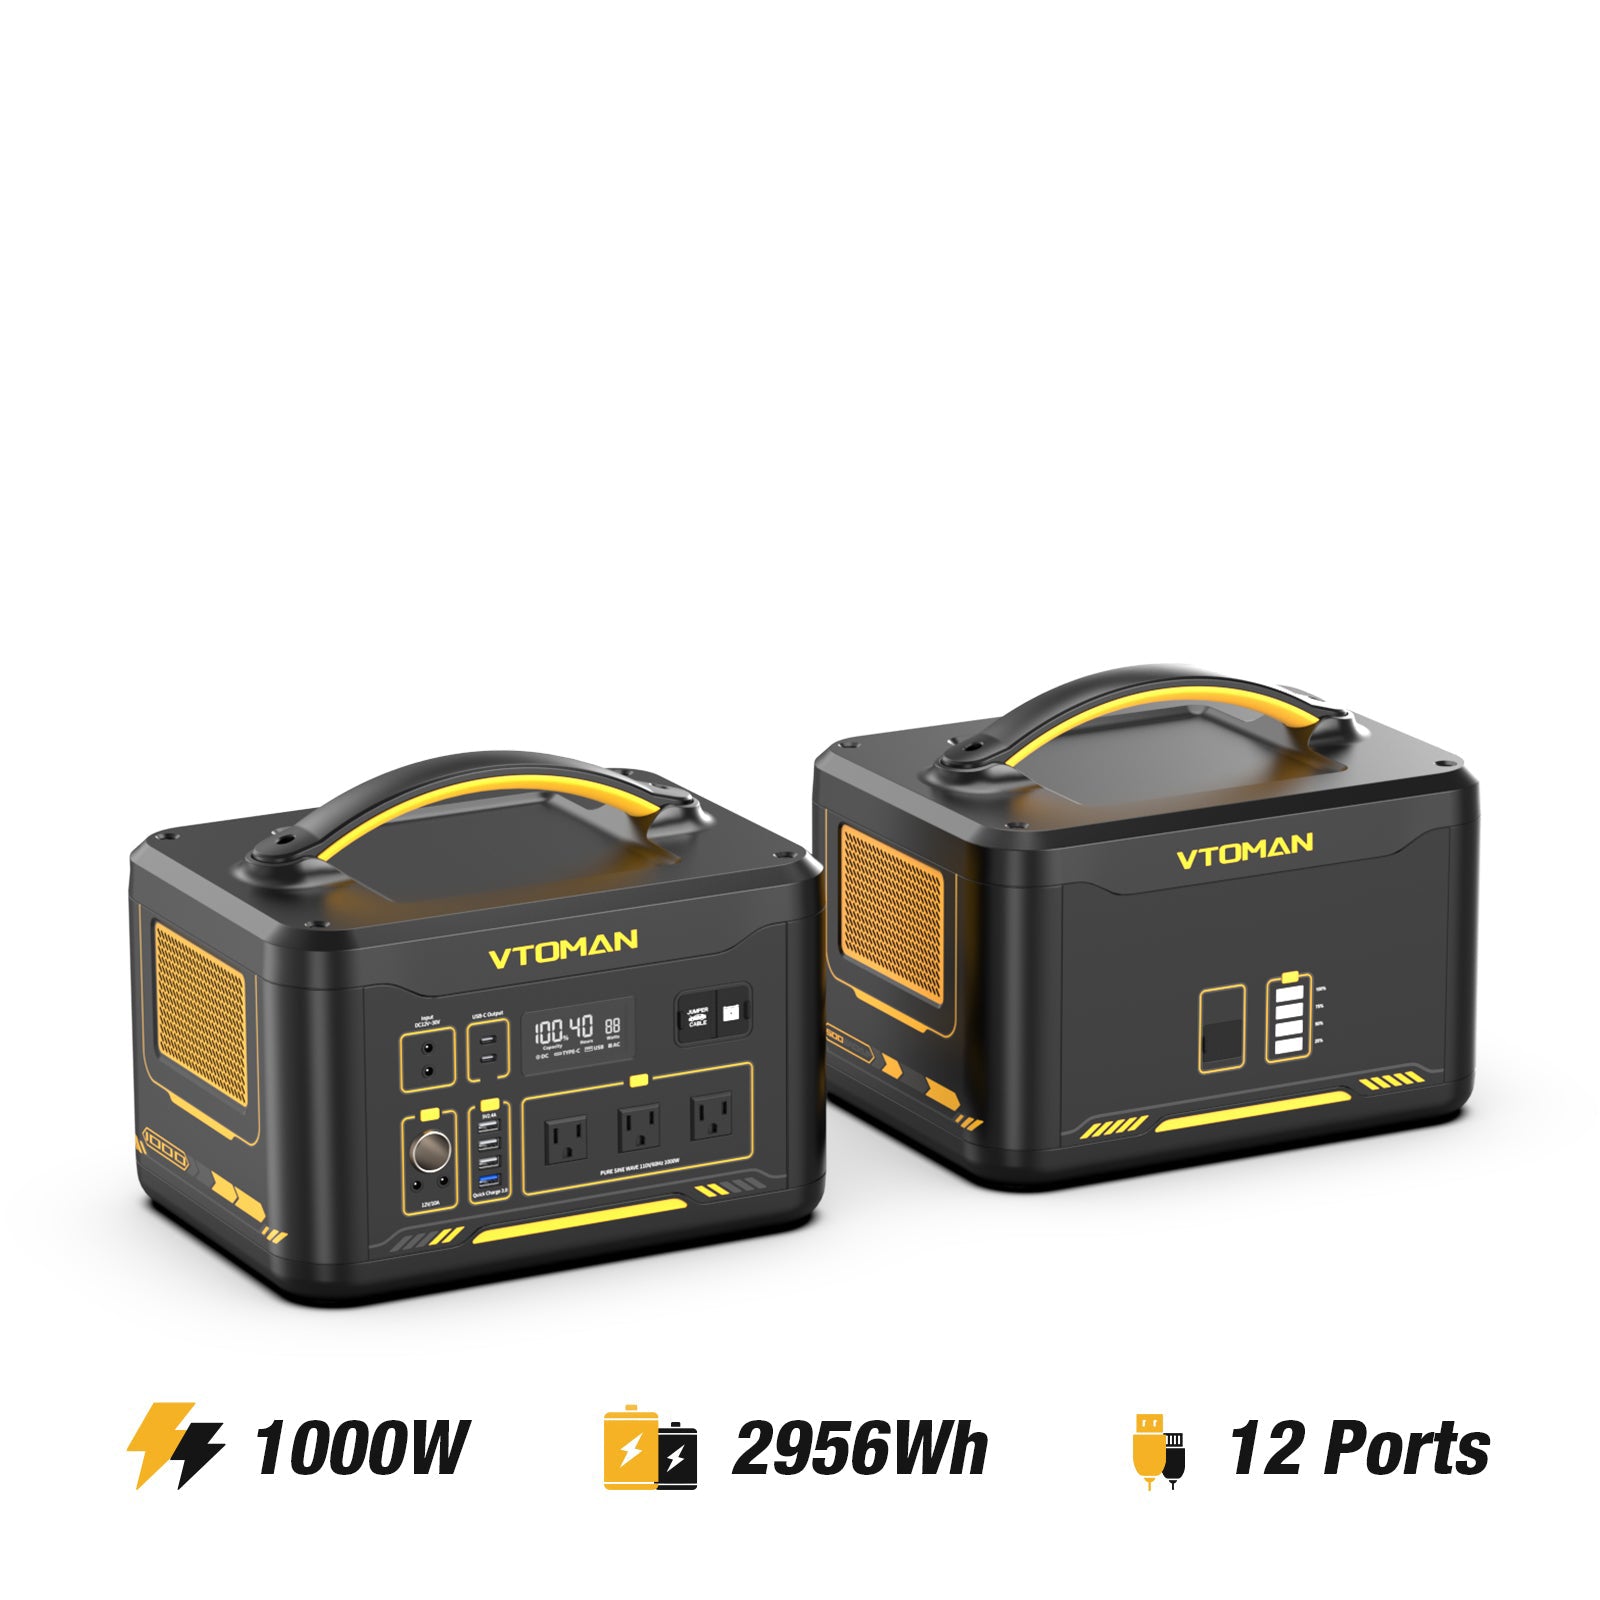 vtoman jump 1000 generator kit